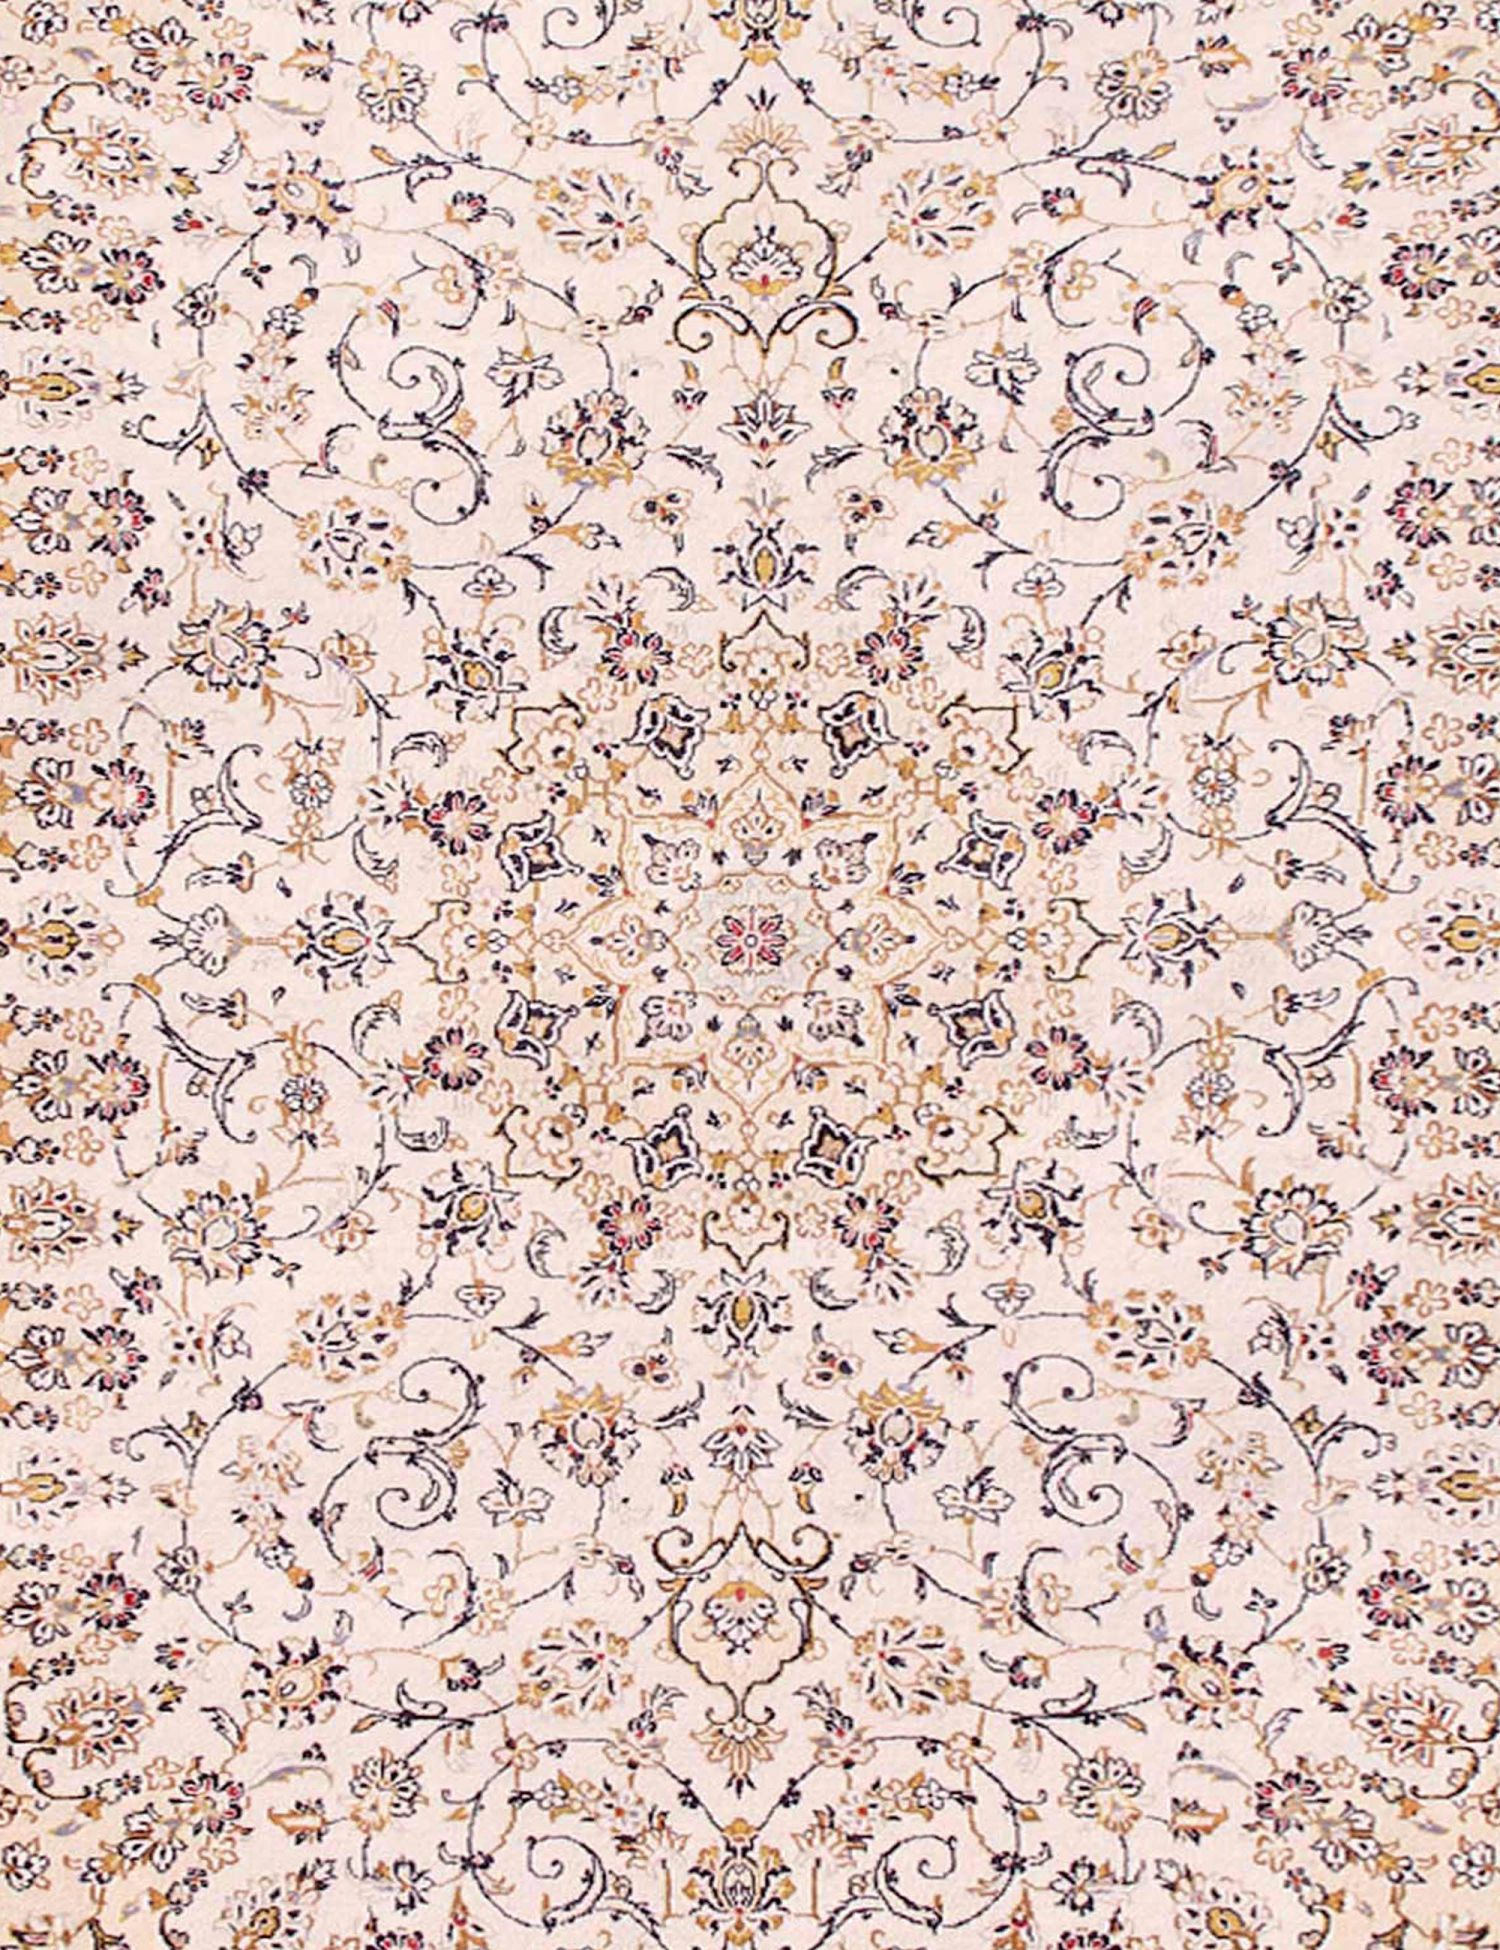 Quadrat Kashan Teppich  beige <br/>242 x 242 cm